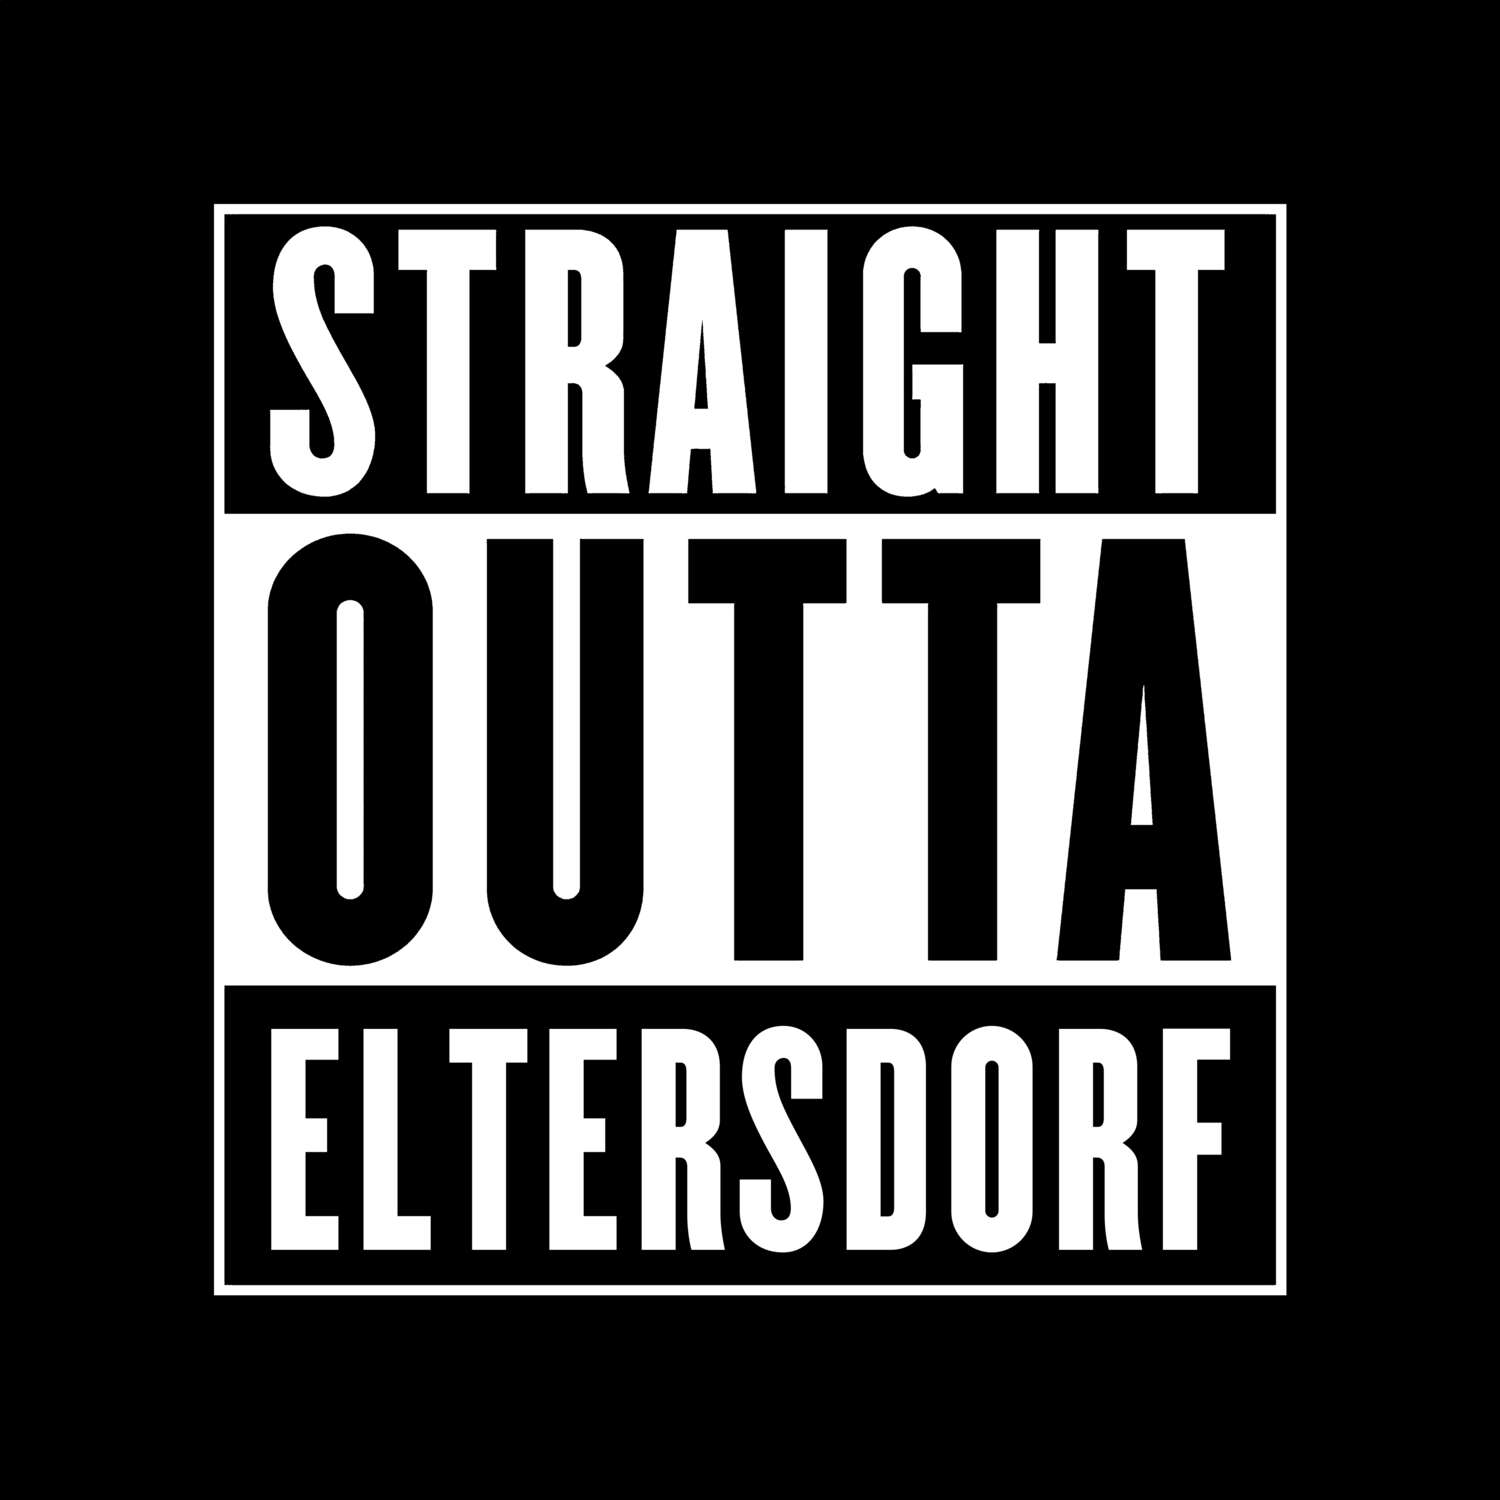 Eltersdorf T-Shirt »Straight Outta«